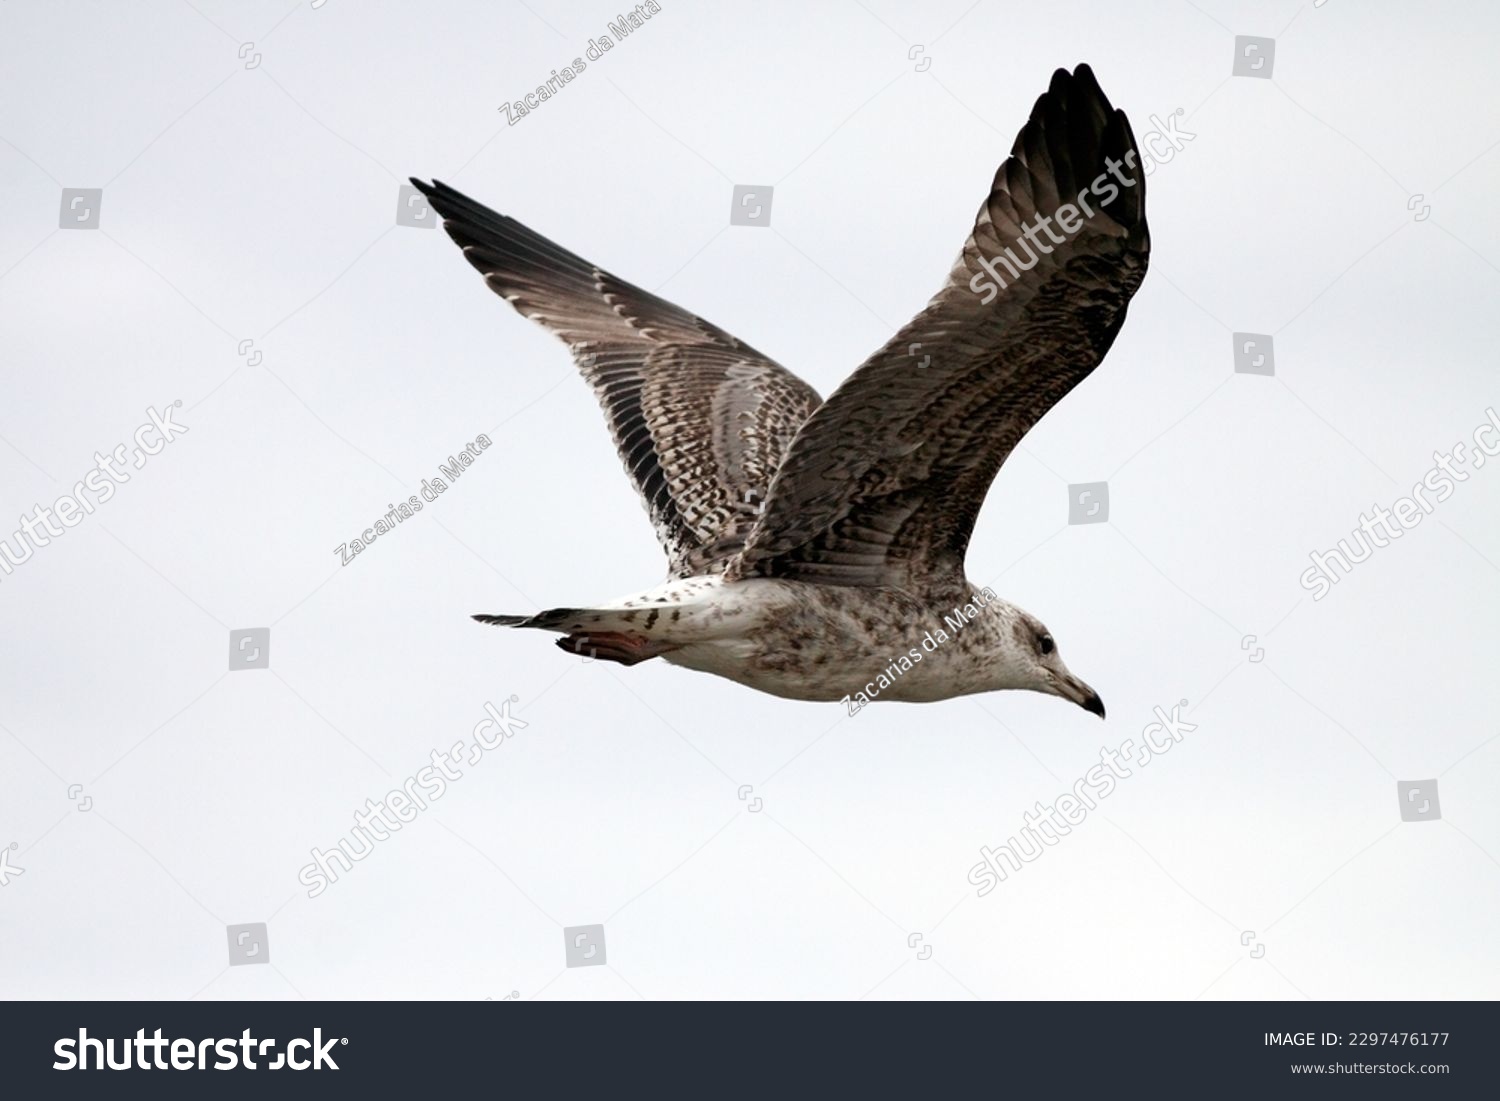 Beautiful seagull in flight seeing details, feather, beak an eye #2297476177